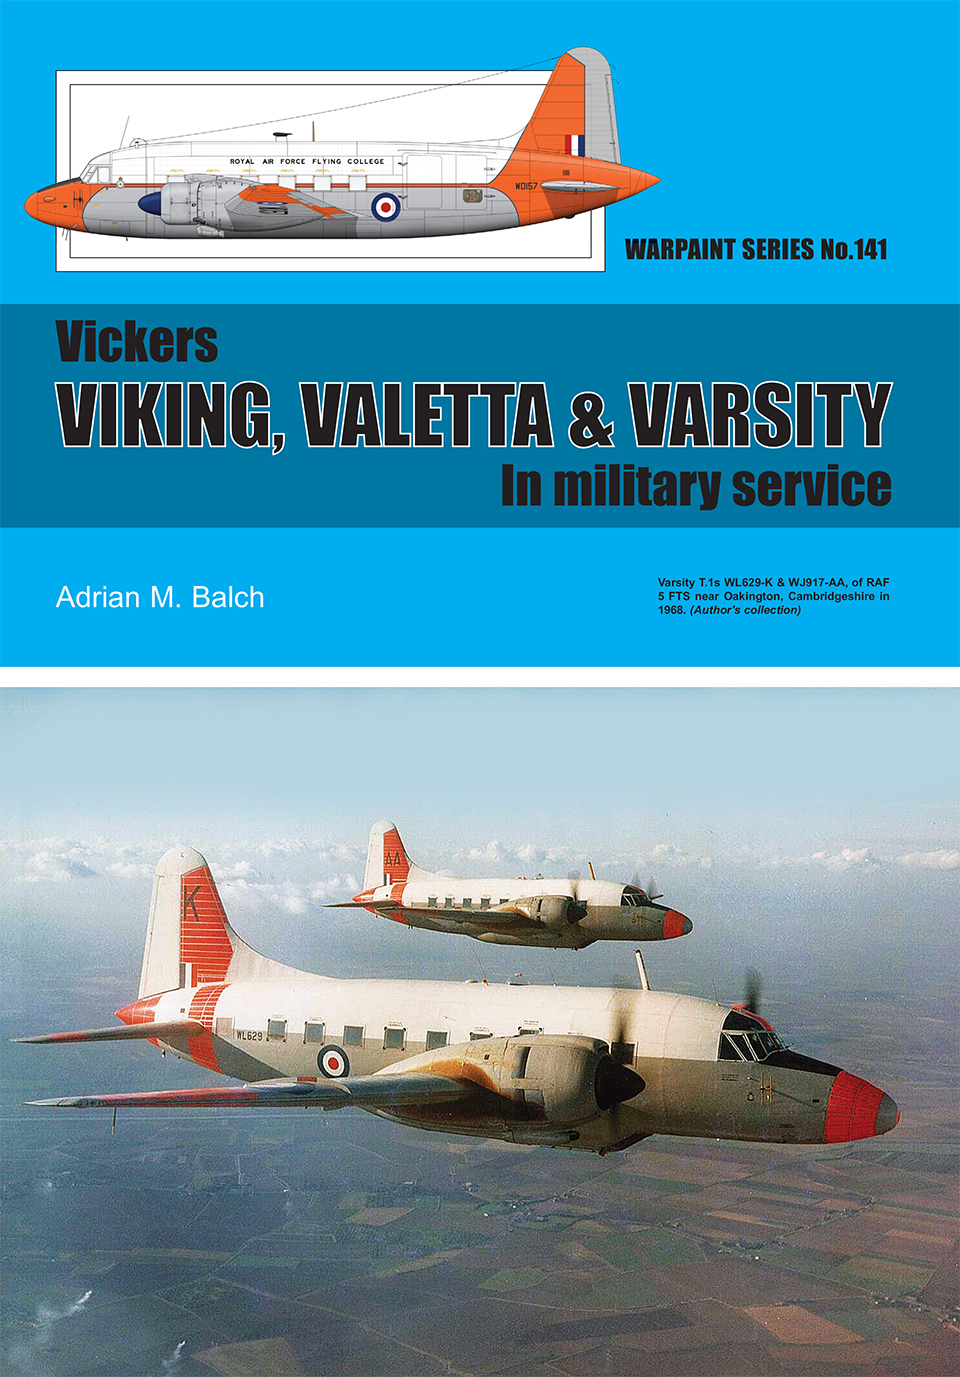 Guideline Publications Ltd Vickers Viking- Valetta & Varsity By Adrian M Balch 